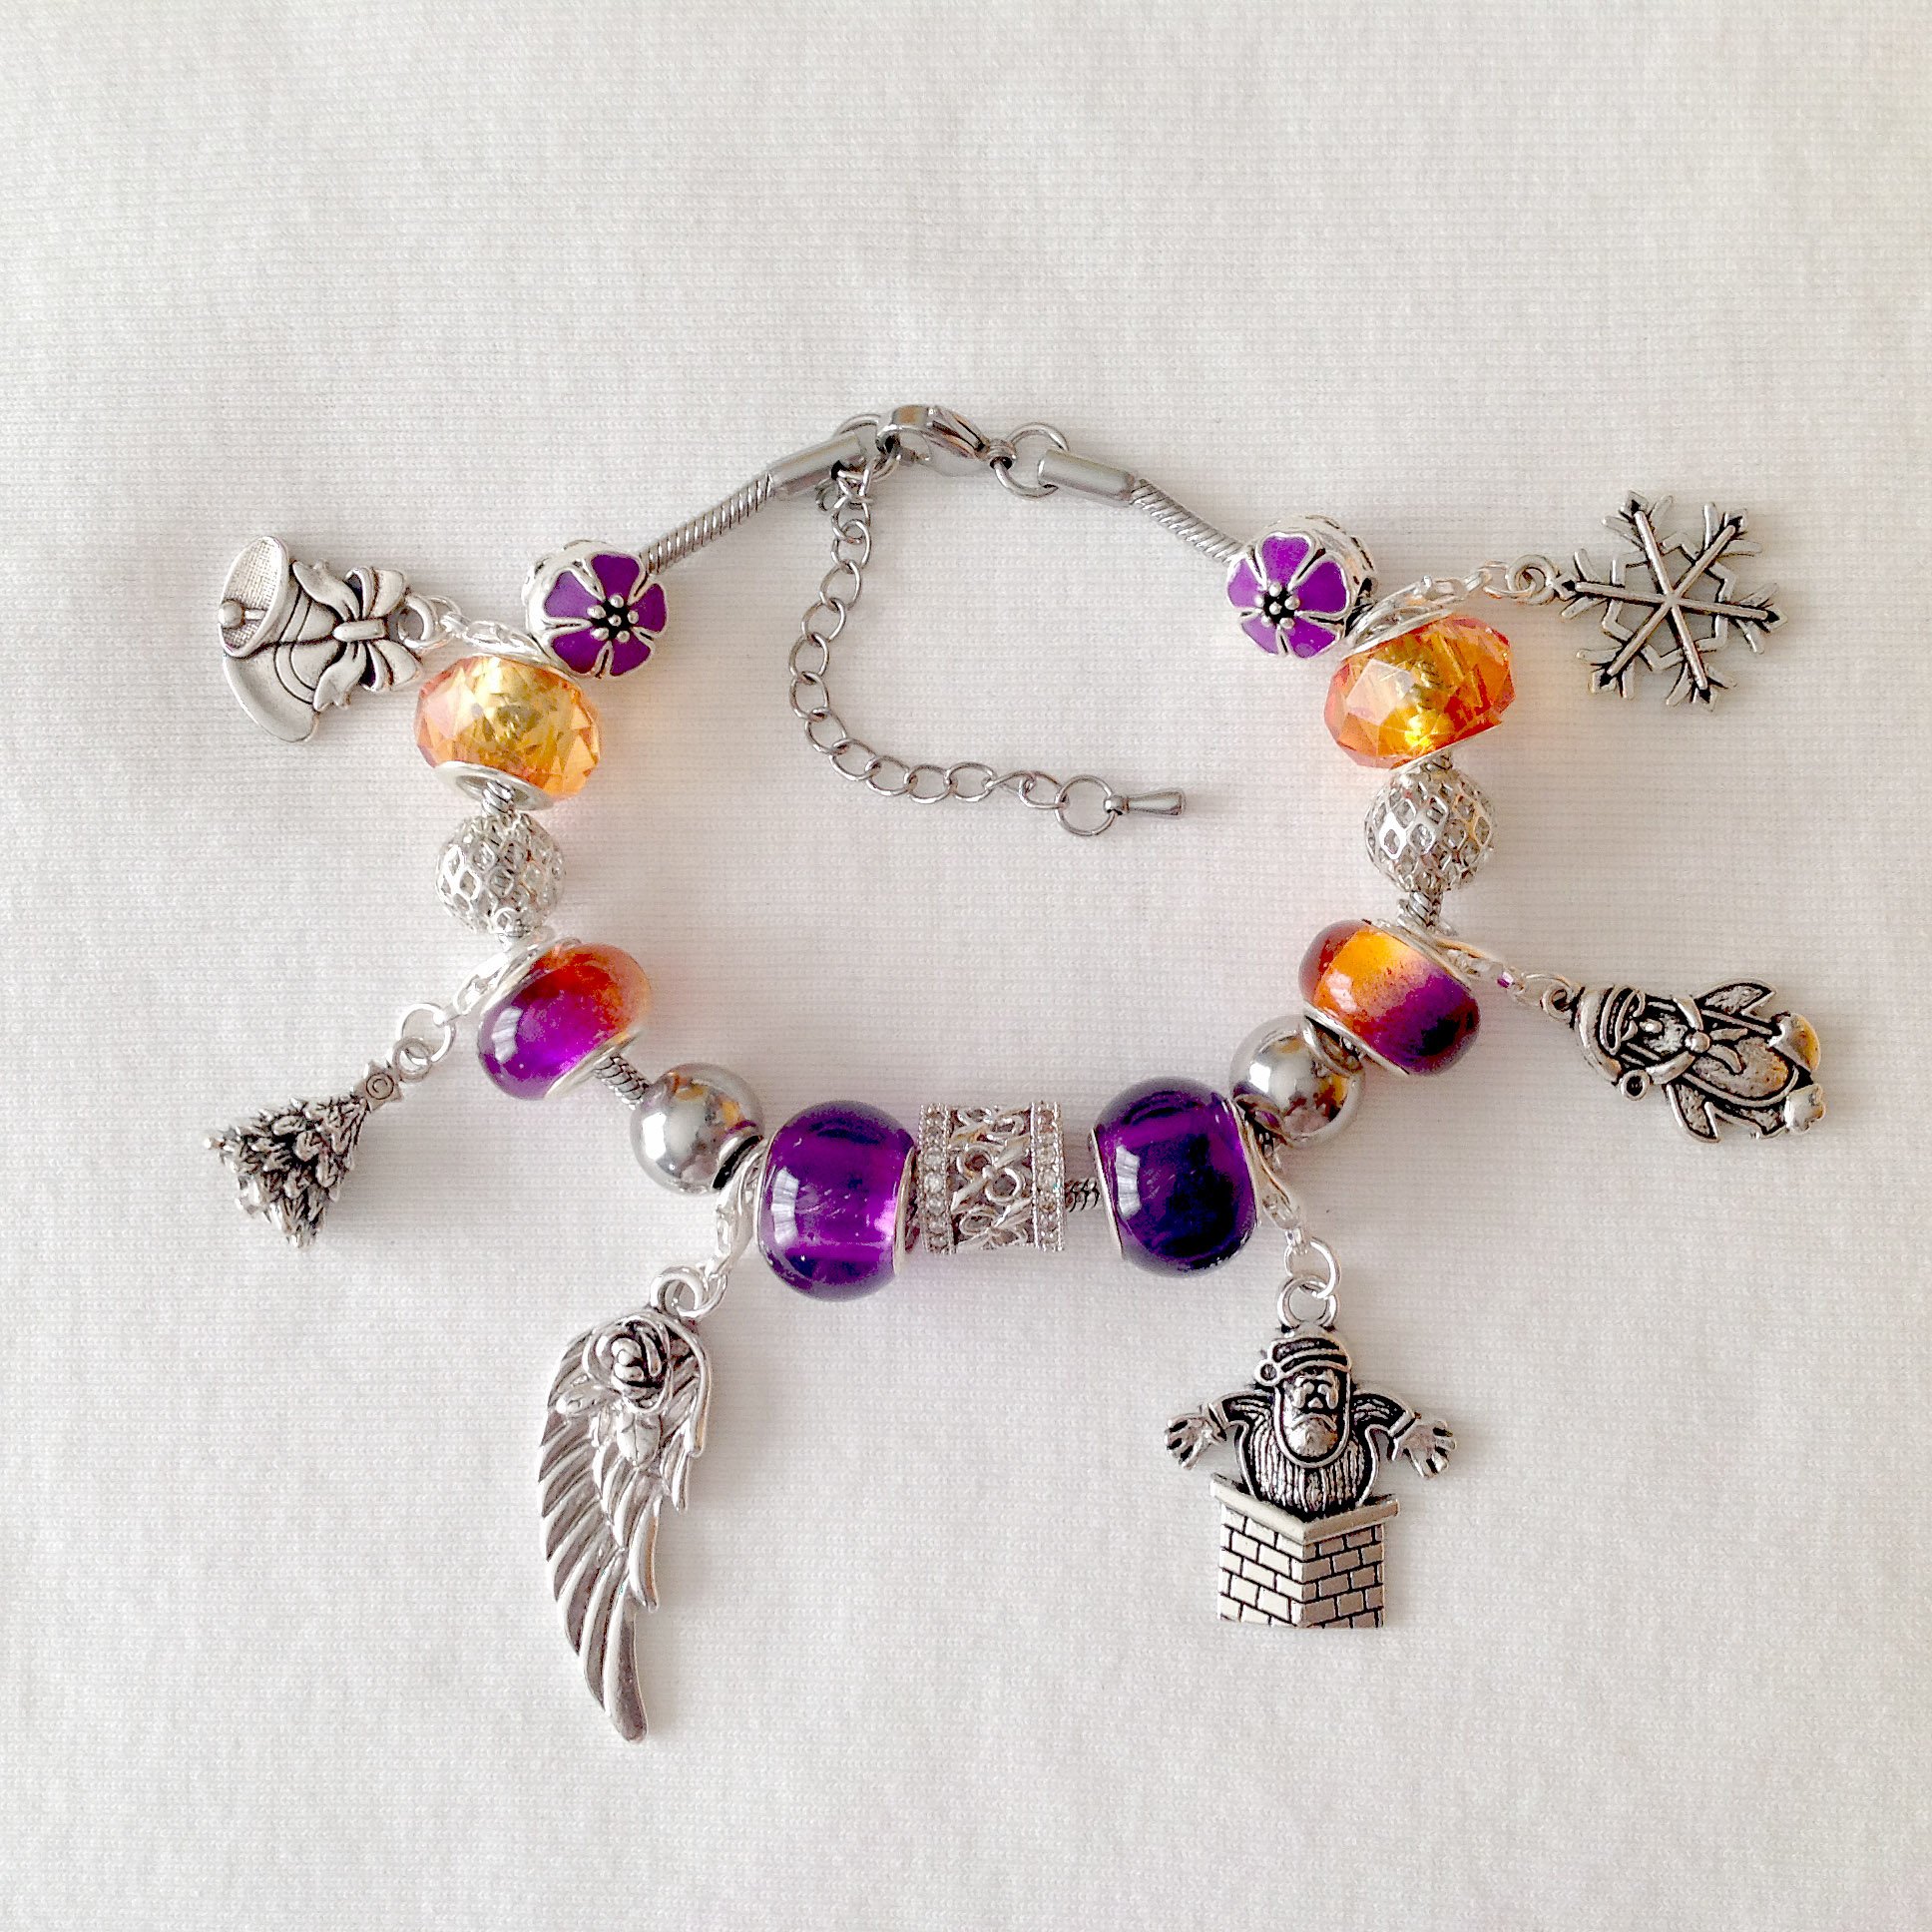  Christmas Memories European Style Charm Bracelet in Silver, Purple and Orange